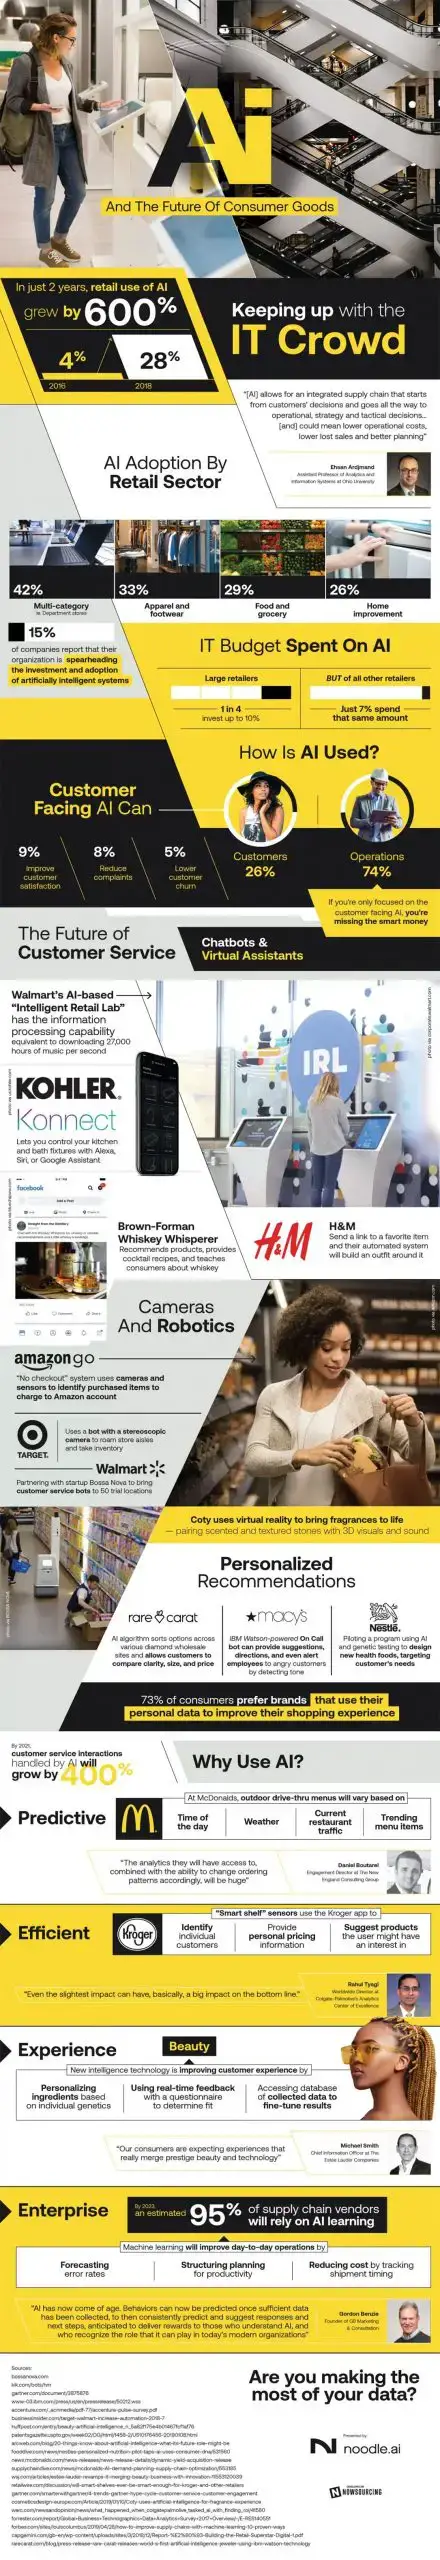 Artificial intelligence consumer